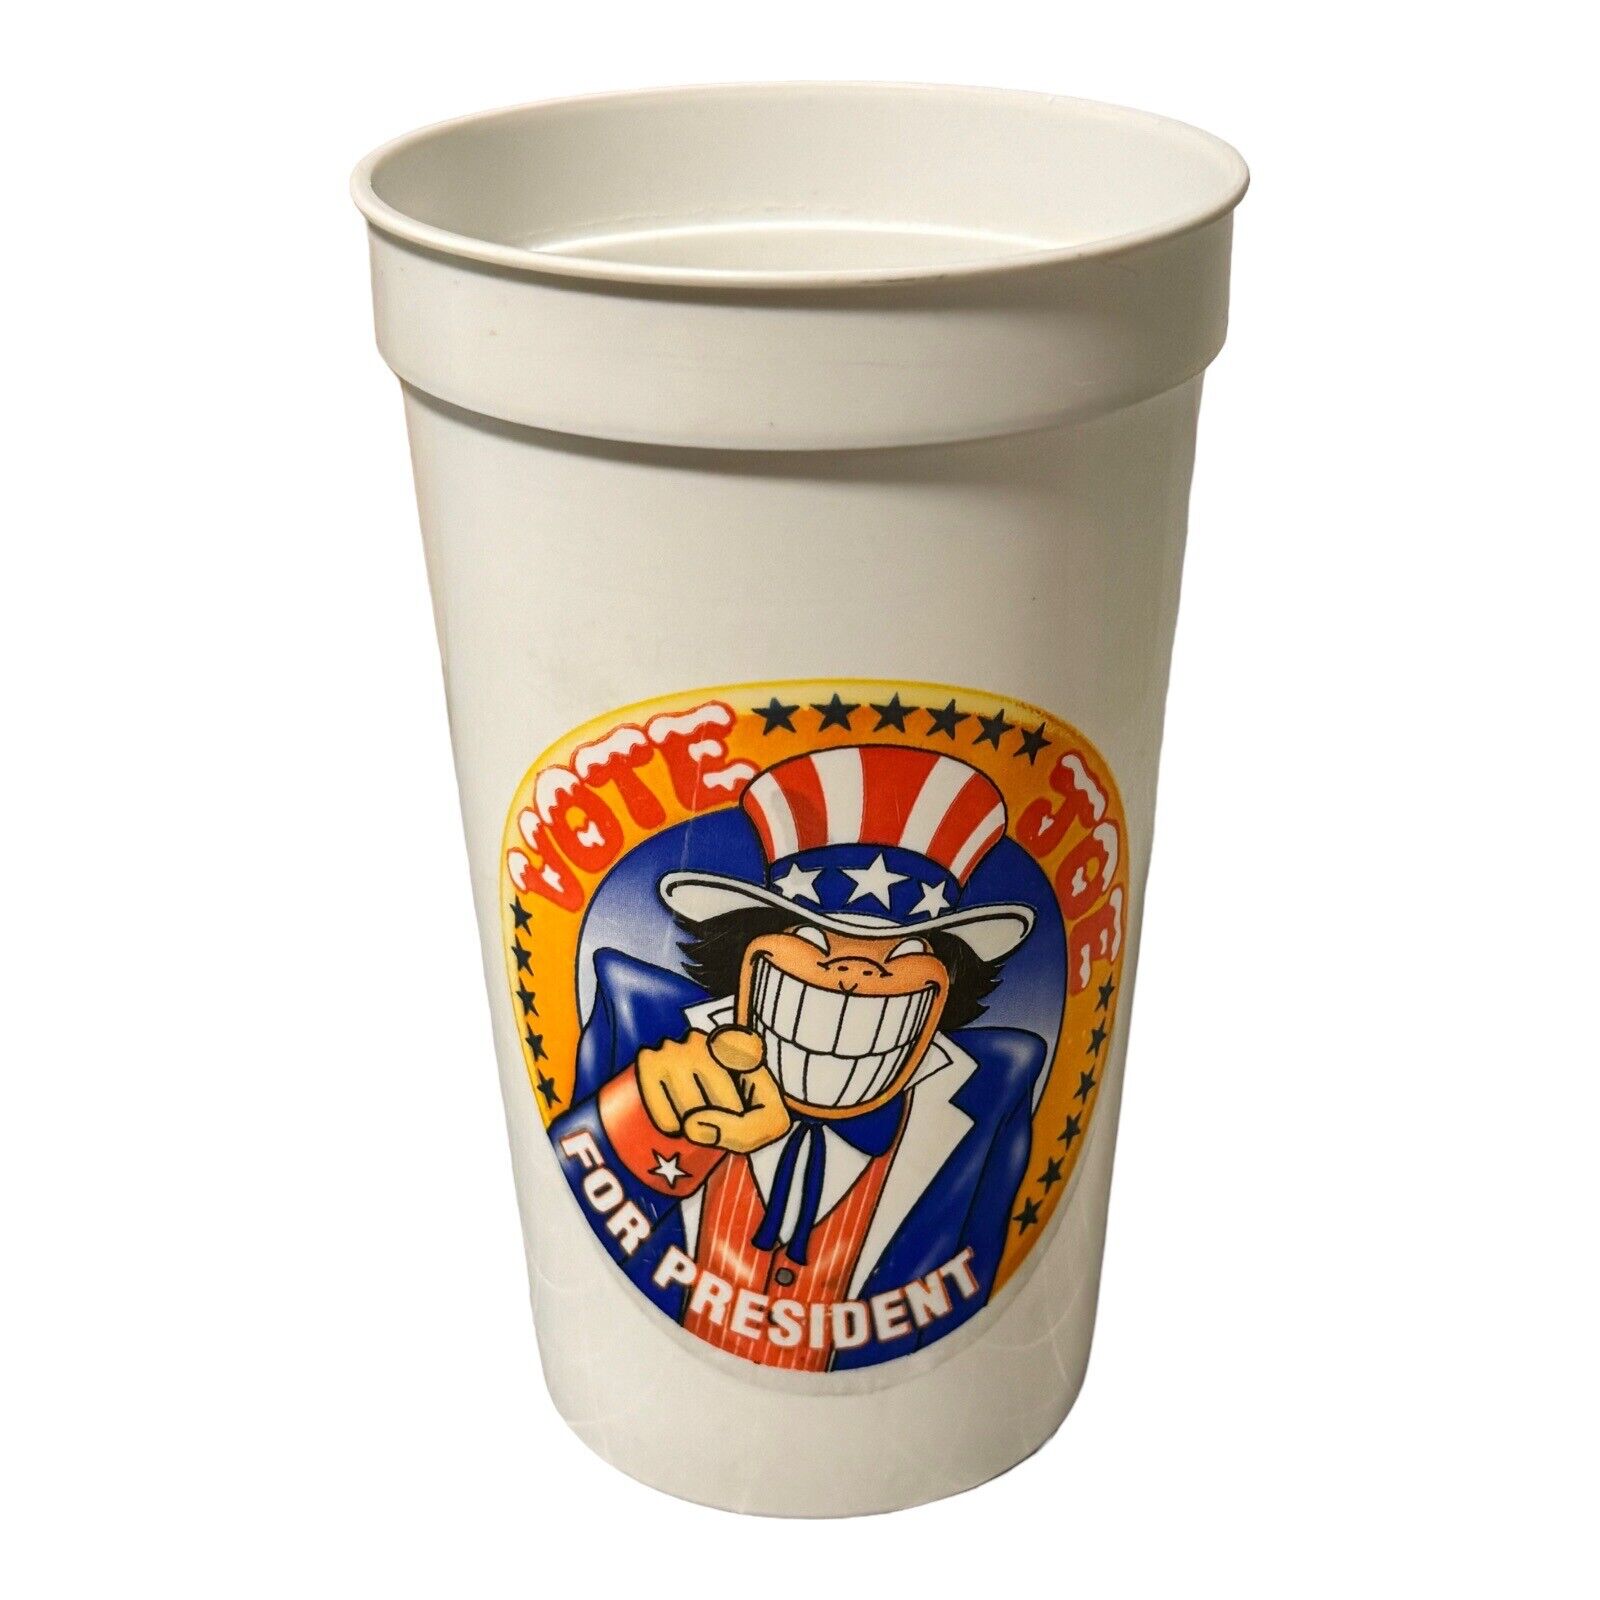 Eskimo Joes Vintage 96 Election Cup